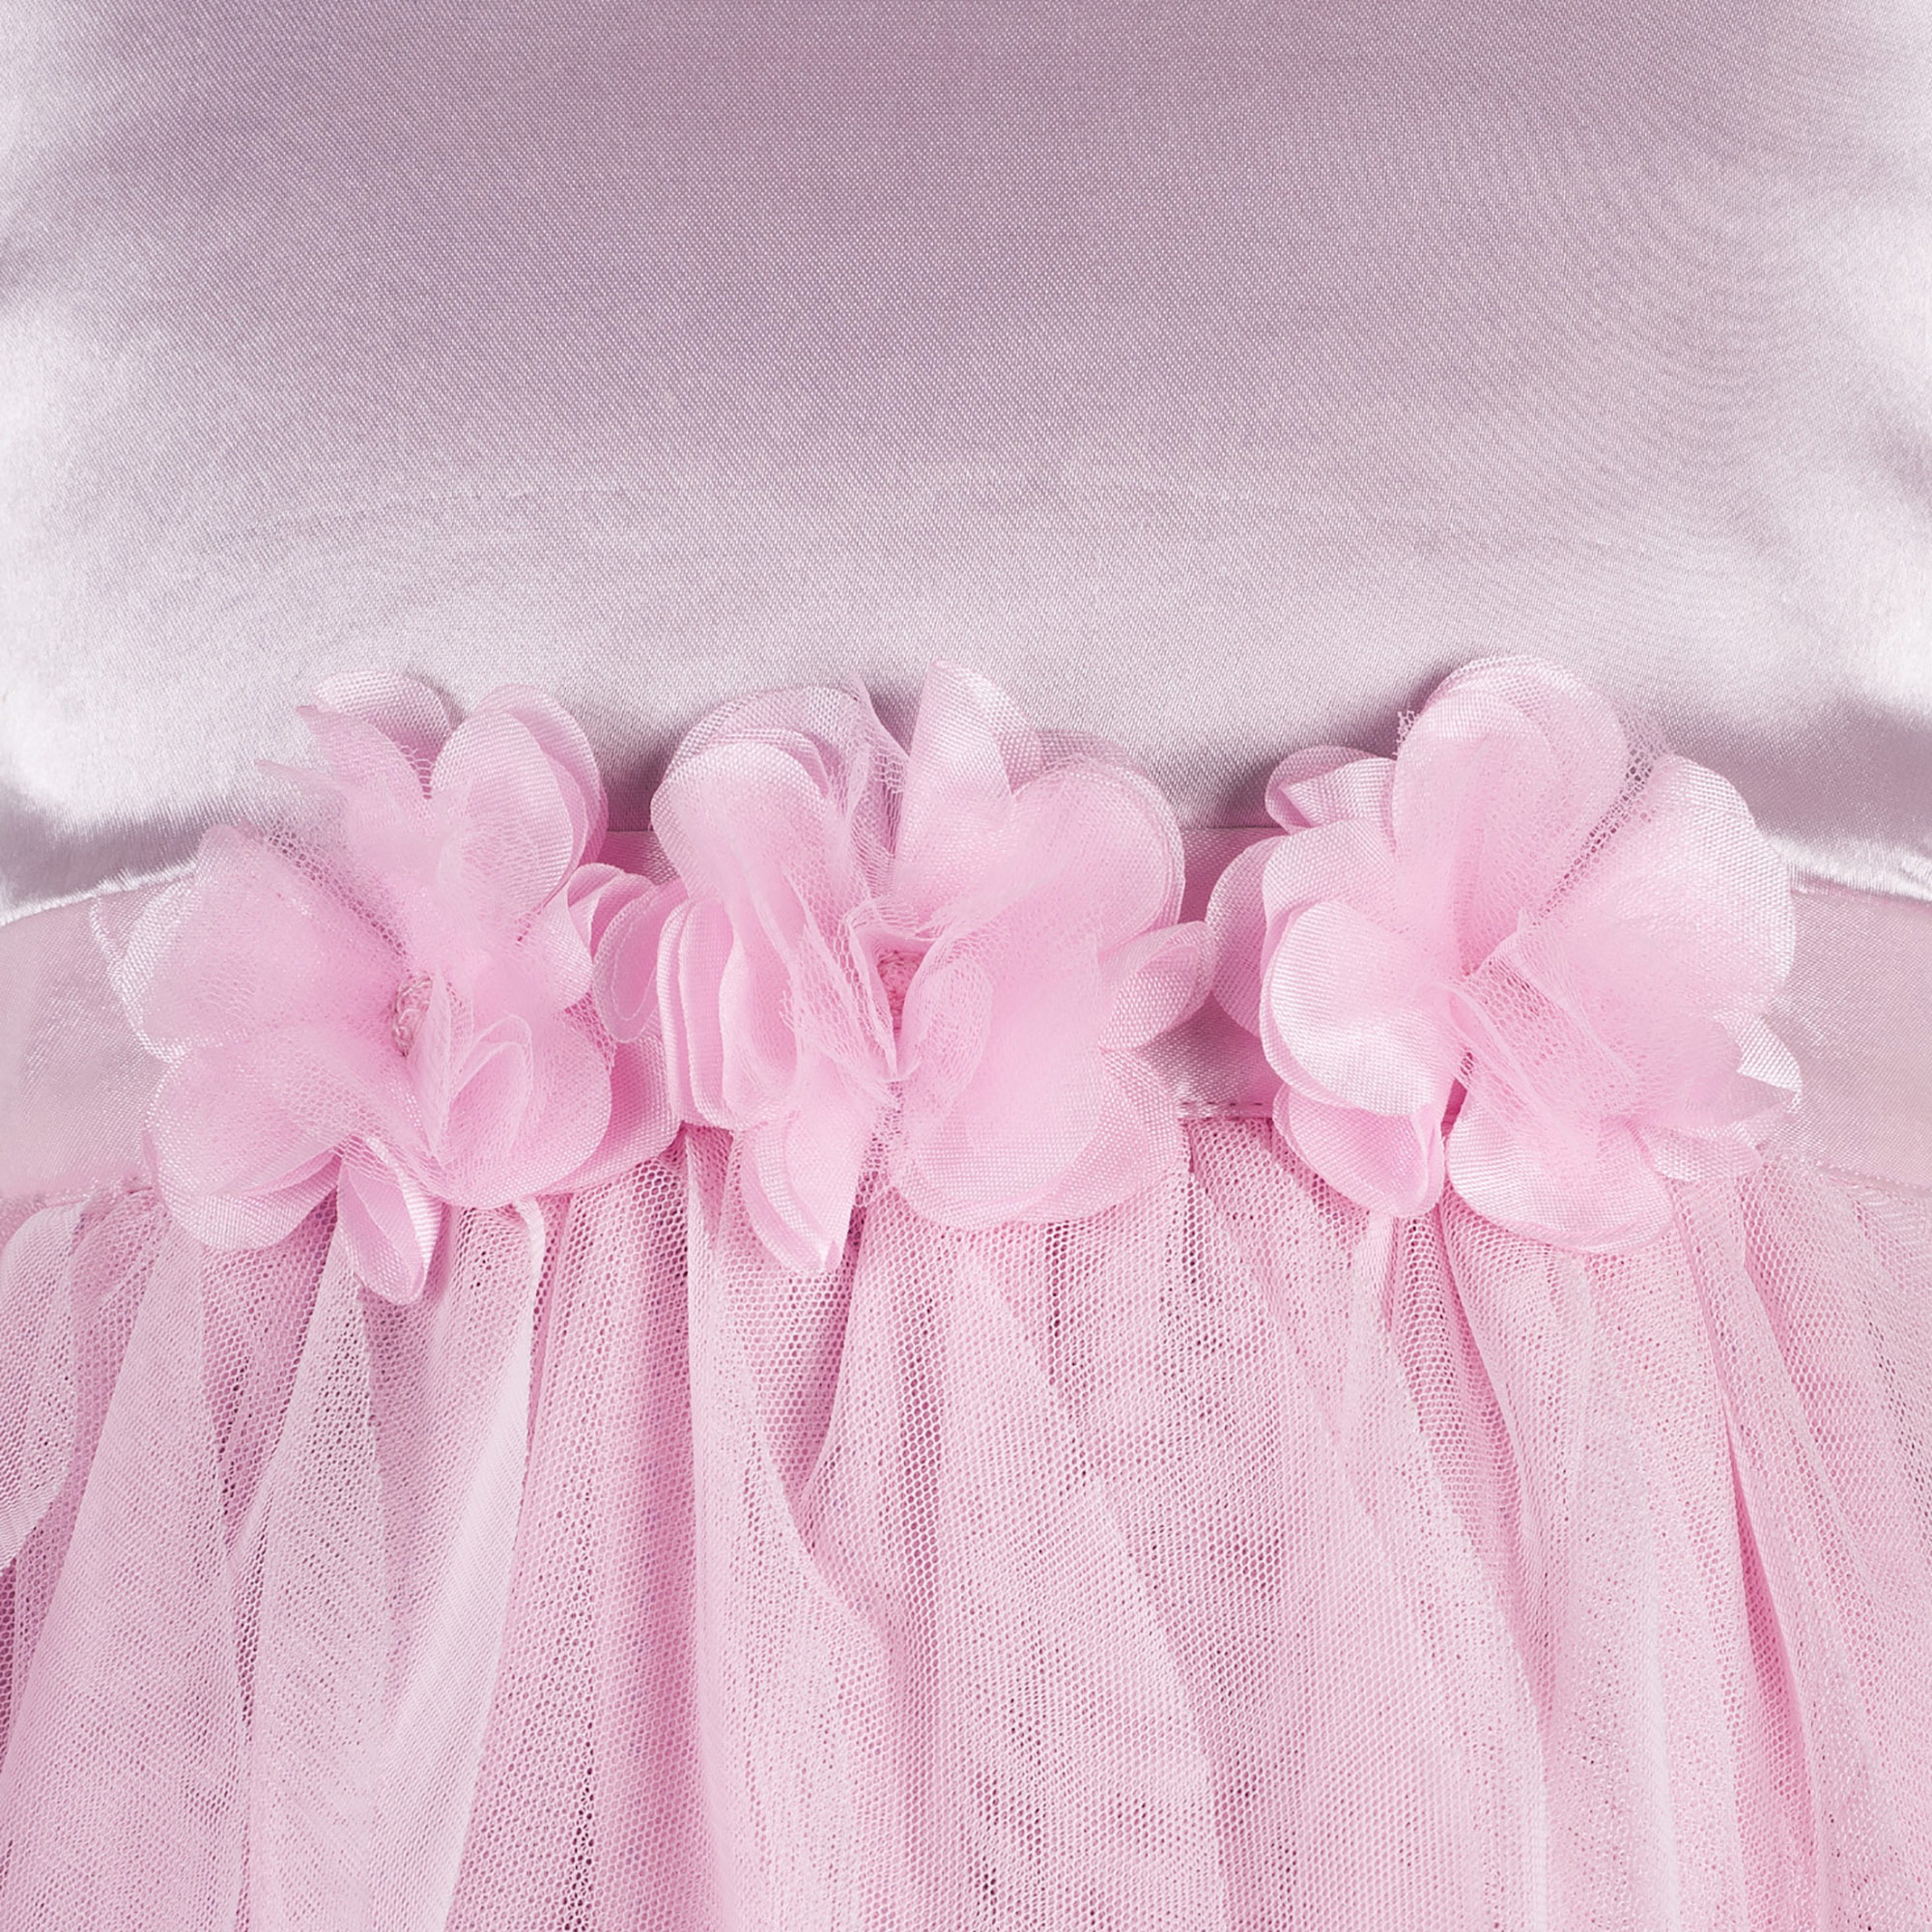 Kids Baby Pink waterfall dress